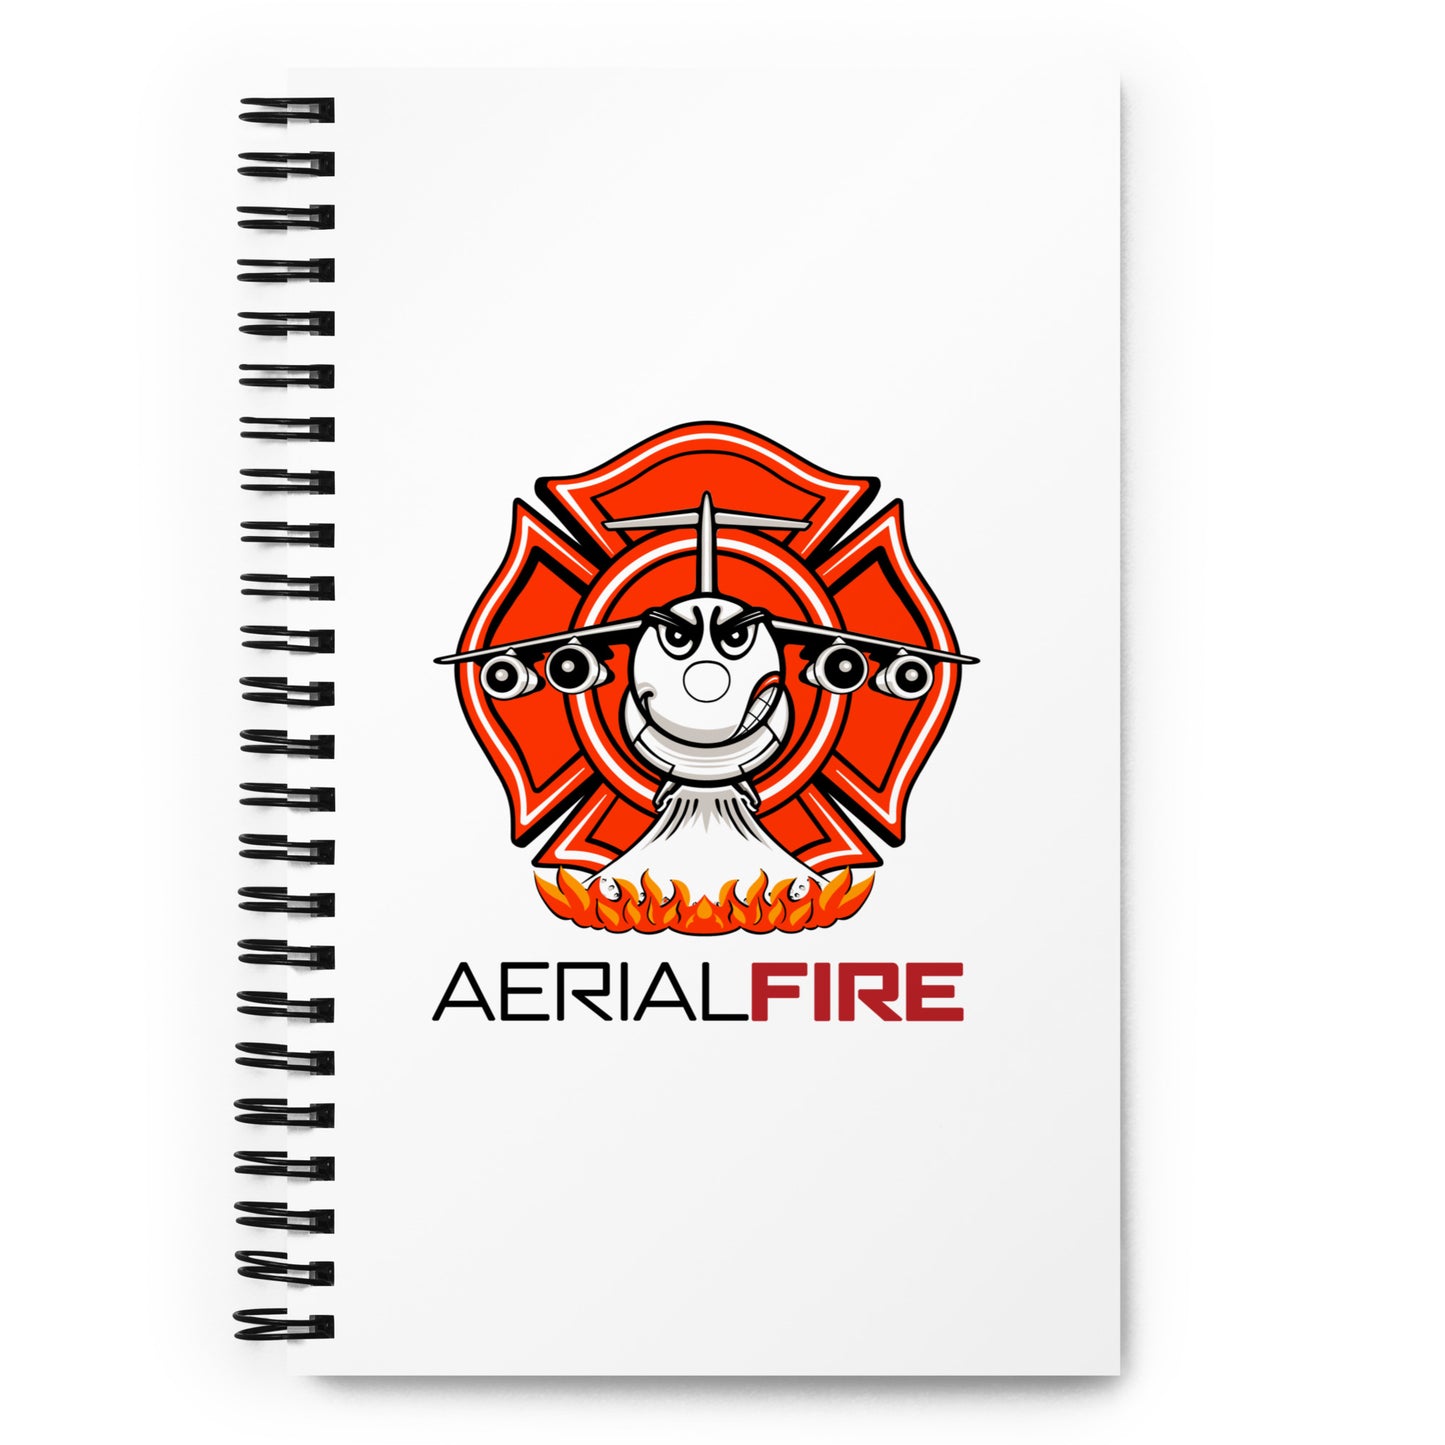 AerialFire BAE146/RJ85 Cartoon Spiral notebook